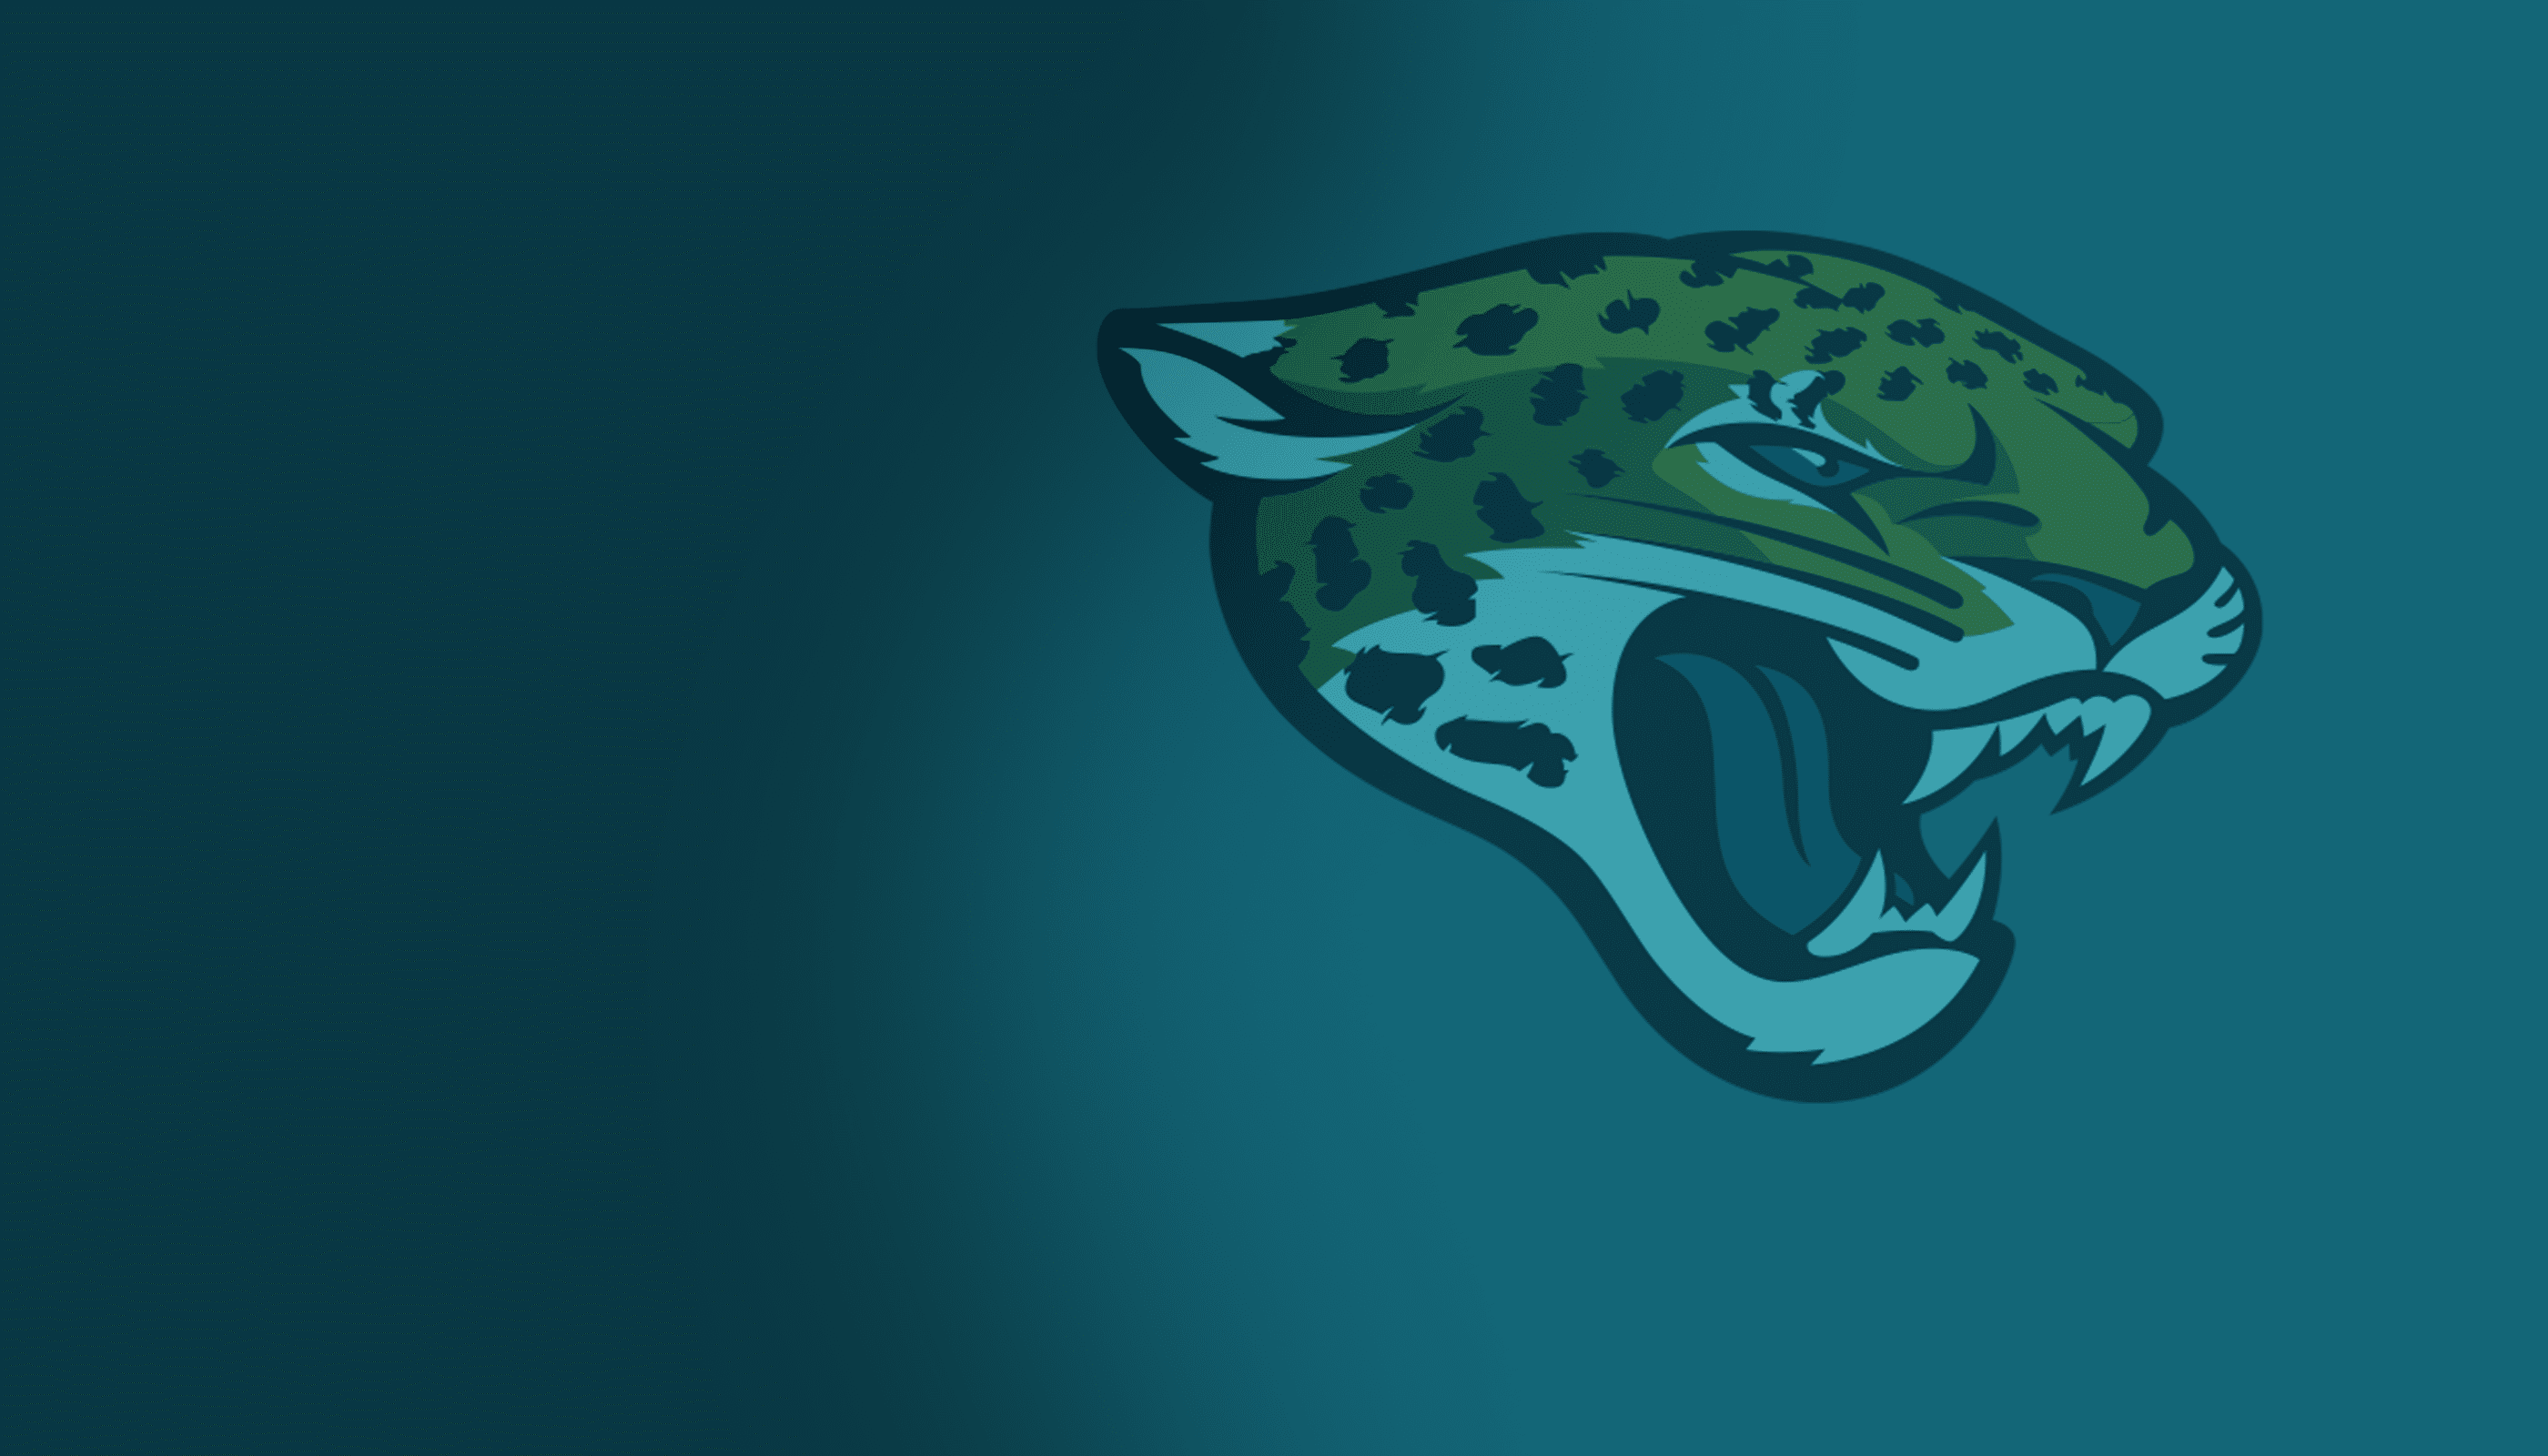 SimplyIOA Announces Partnership with the Jacksonville Jaguars